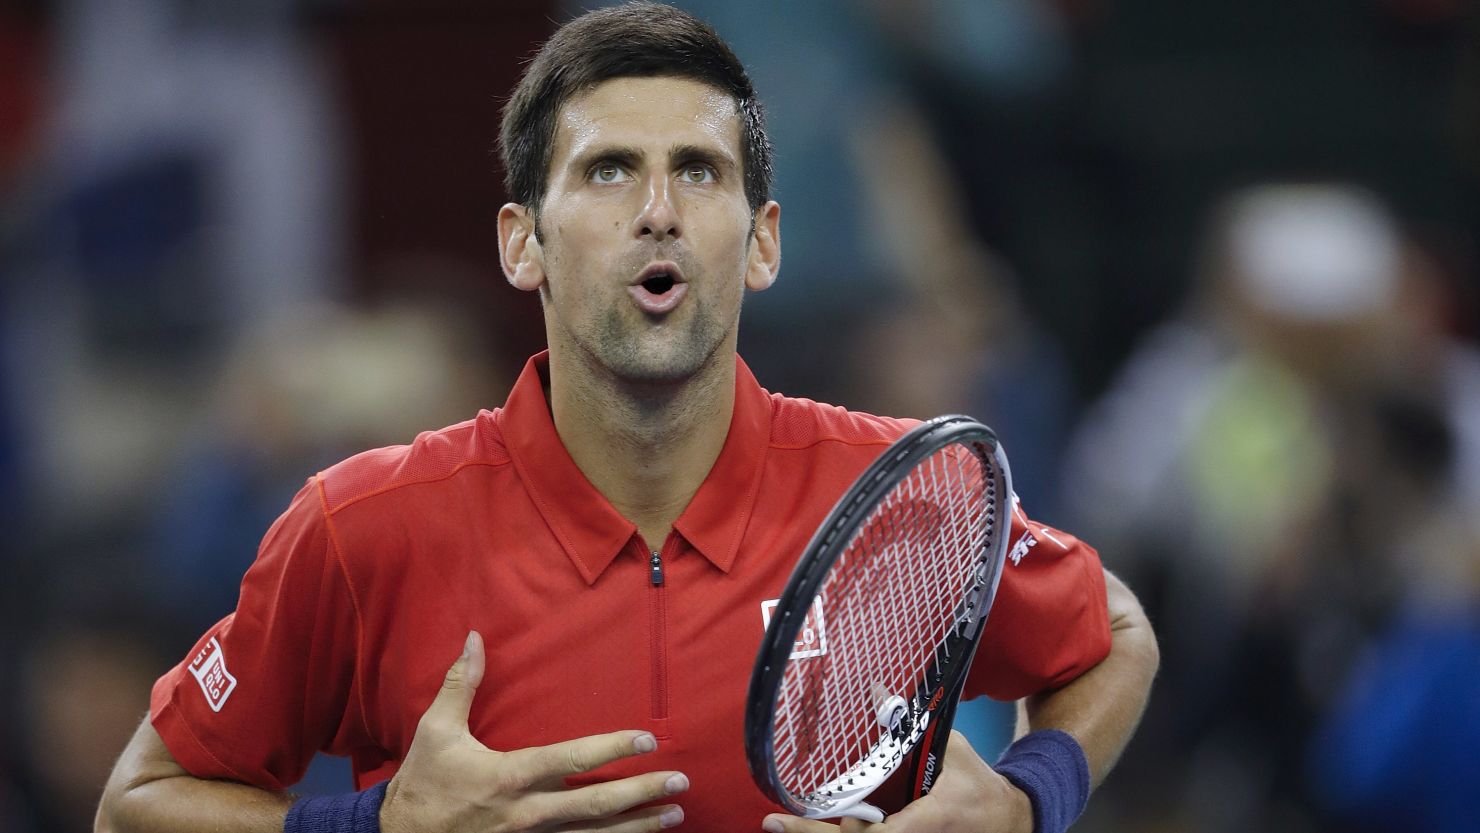 Novak Djokovic celebrates after defeating Mischa Zverev at the Shanghai Masters.